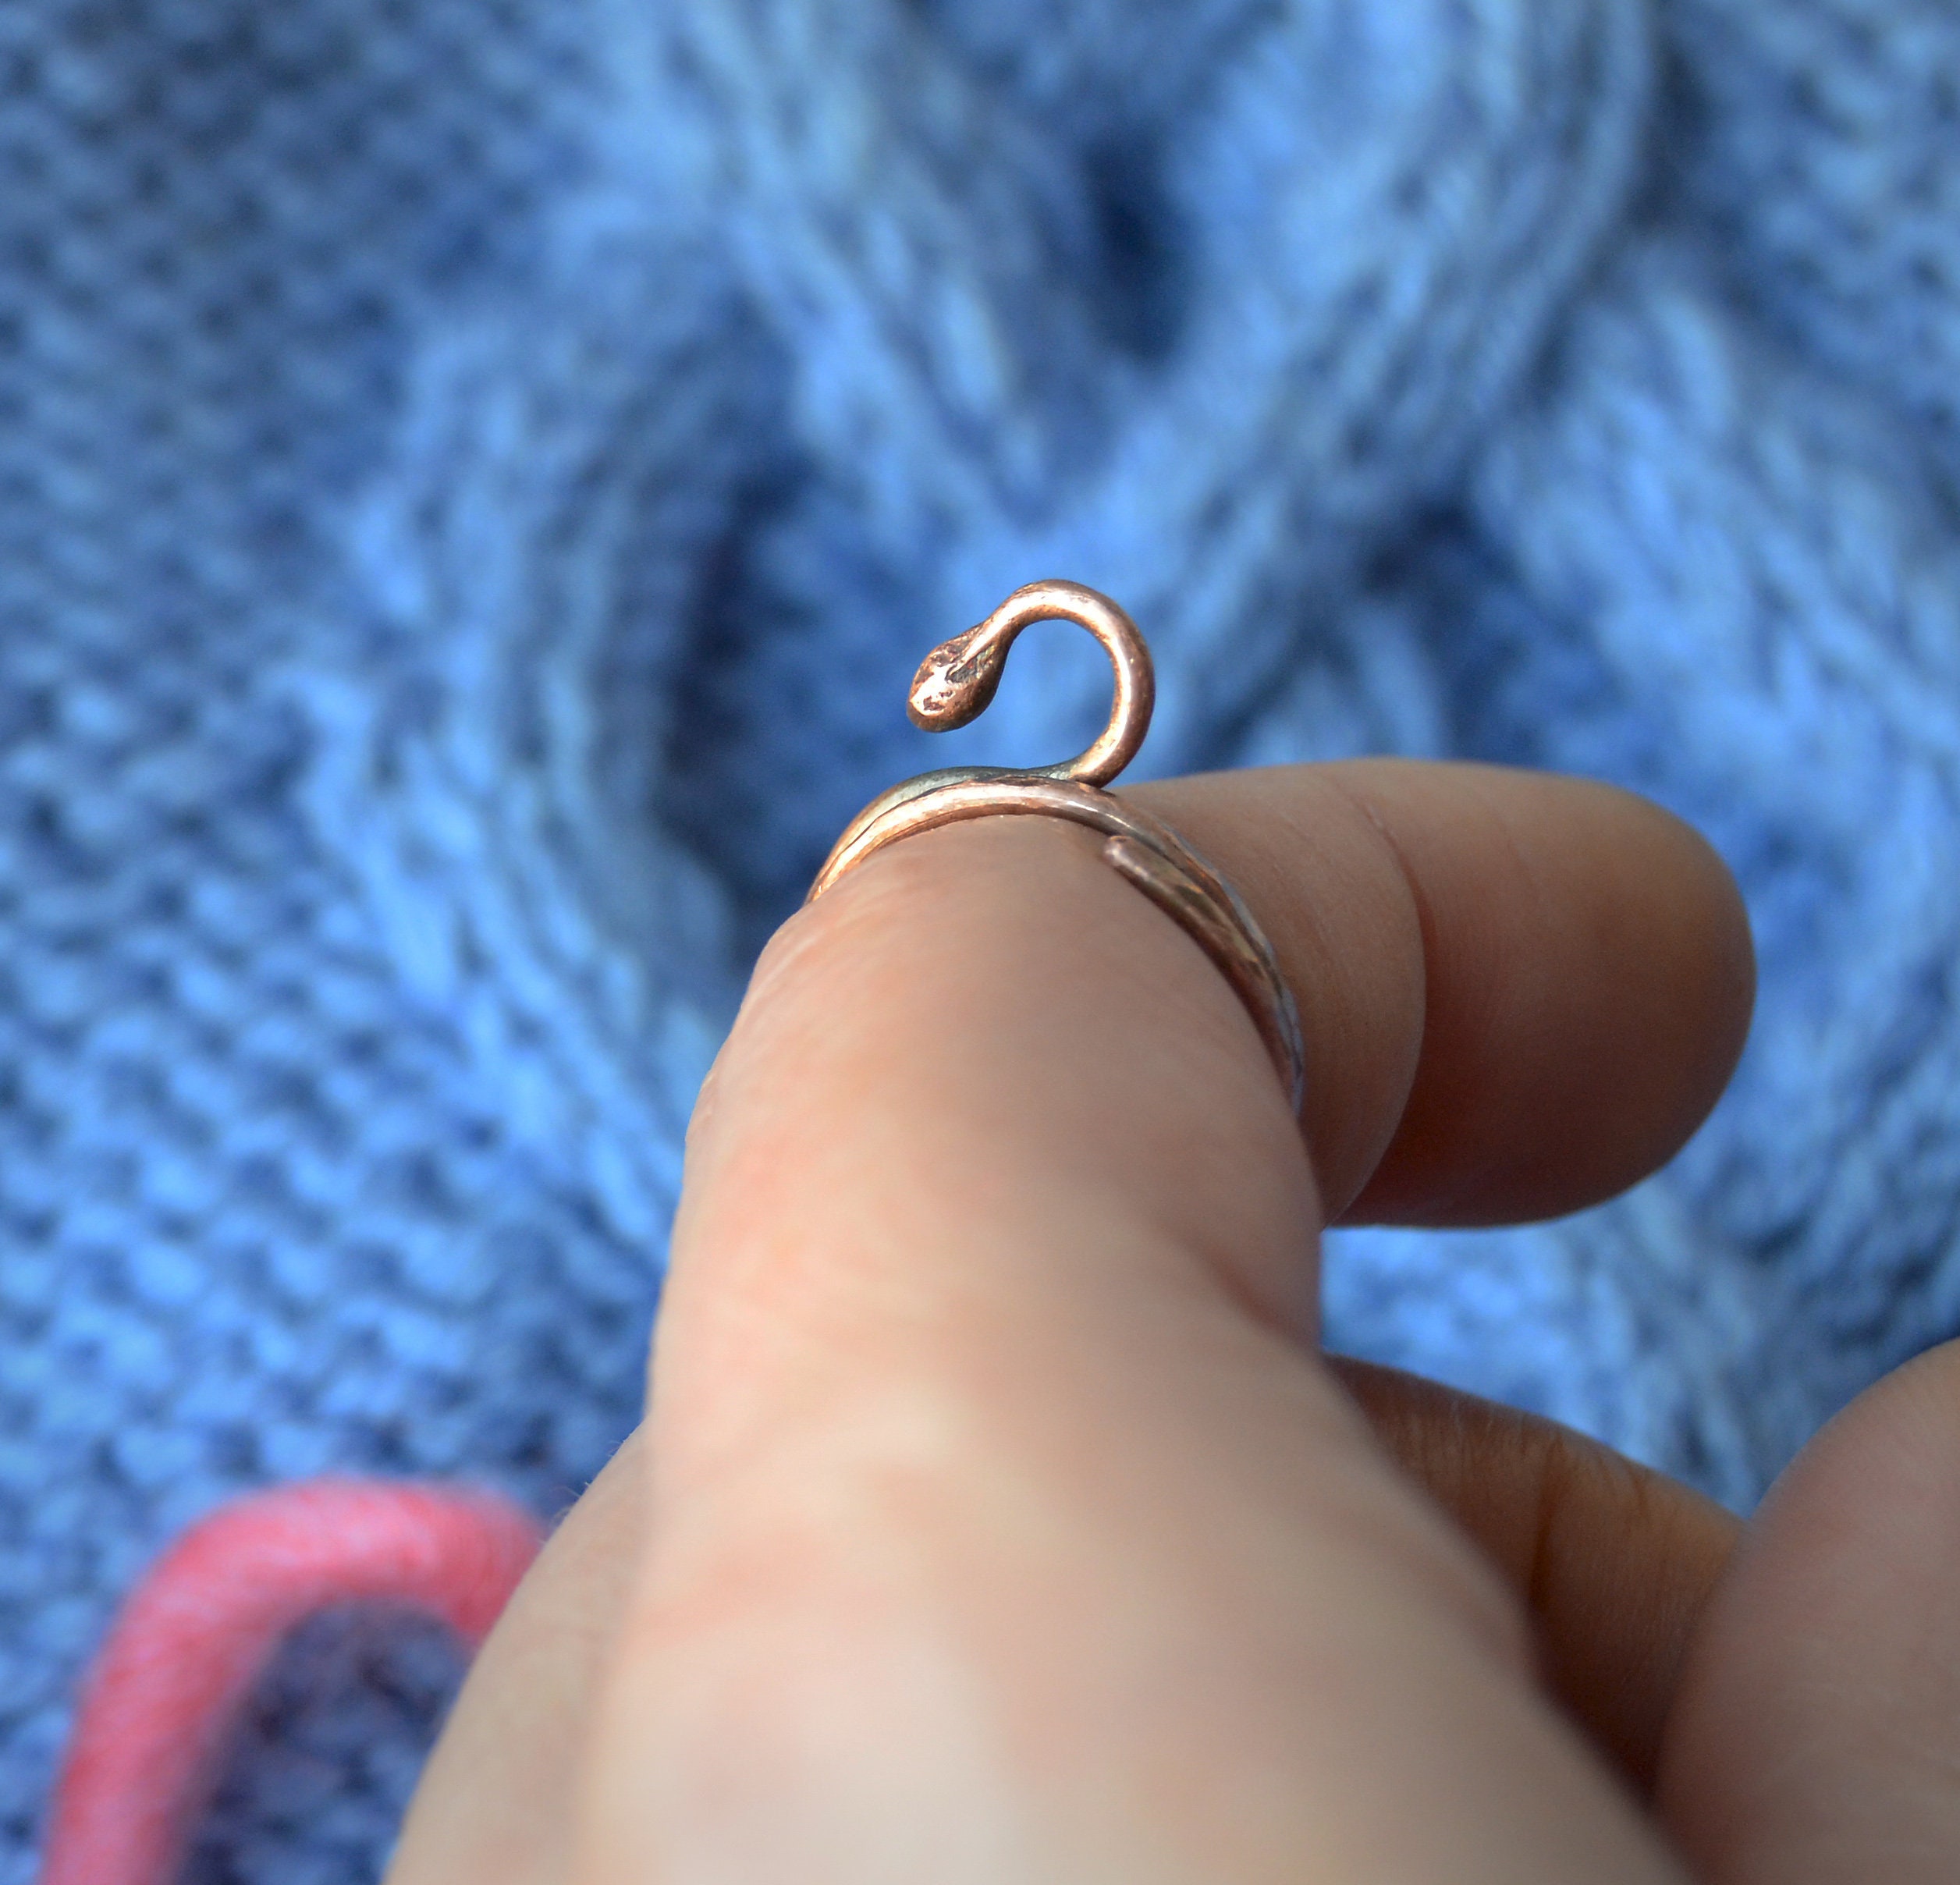 BSWAJIOJIO Womens Rings Set Yarn Ring Adjustable Size Crochet Ring